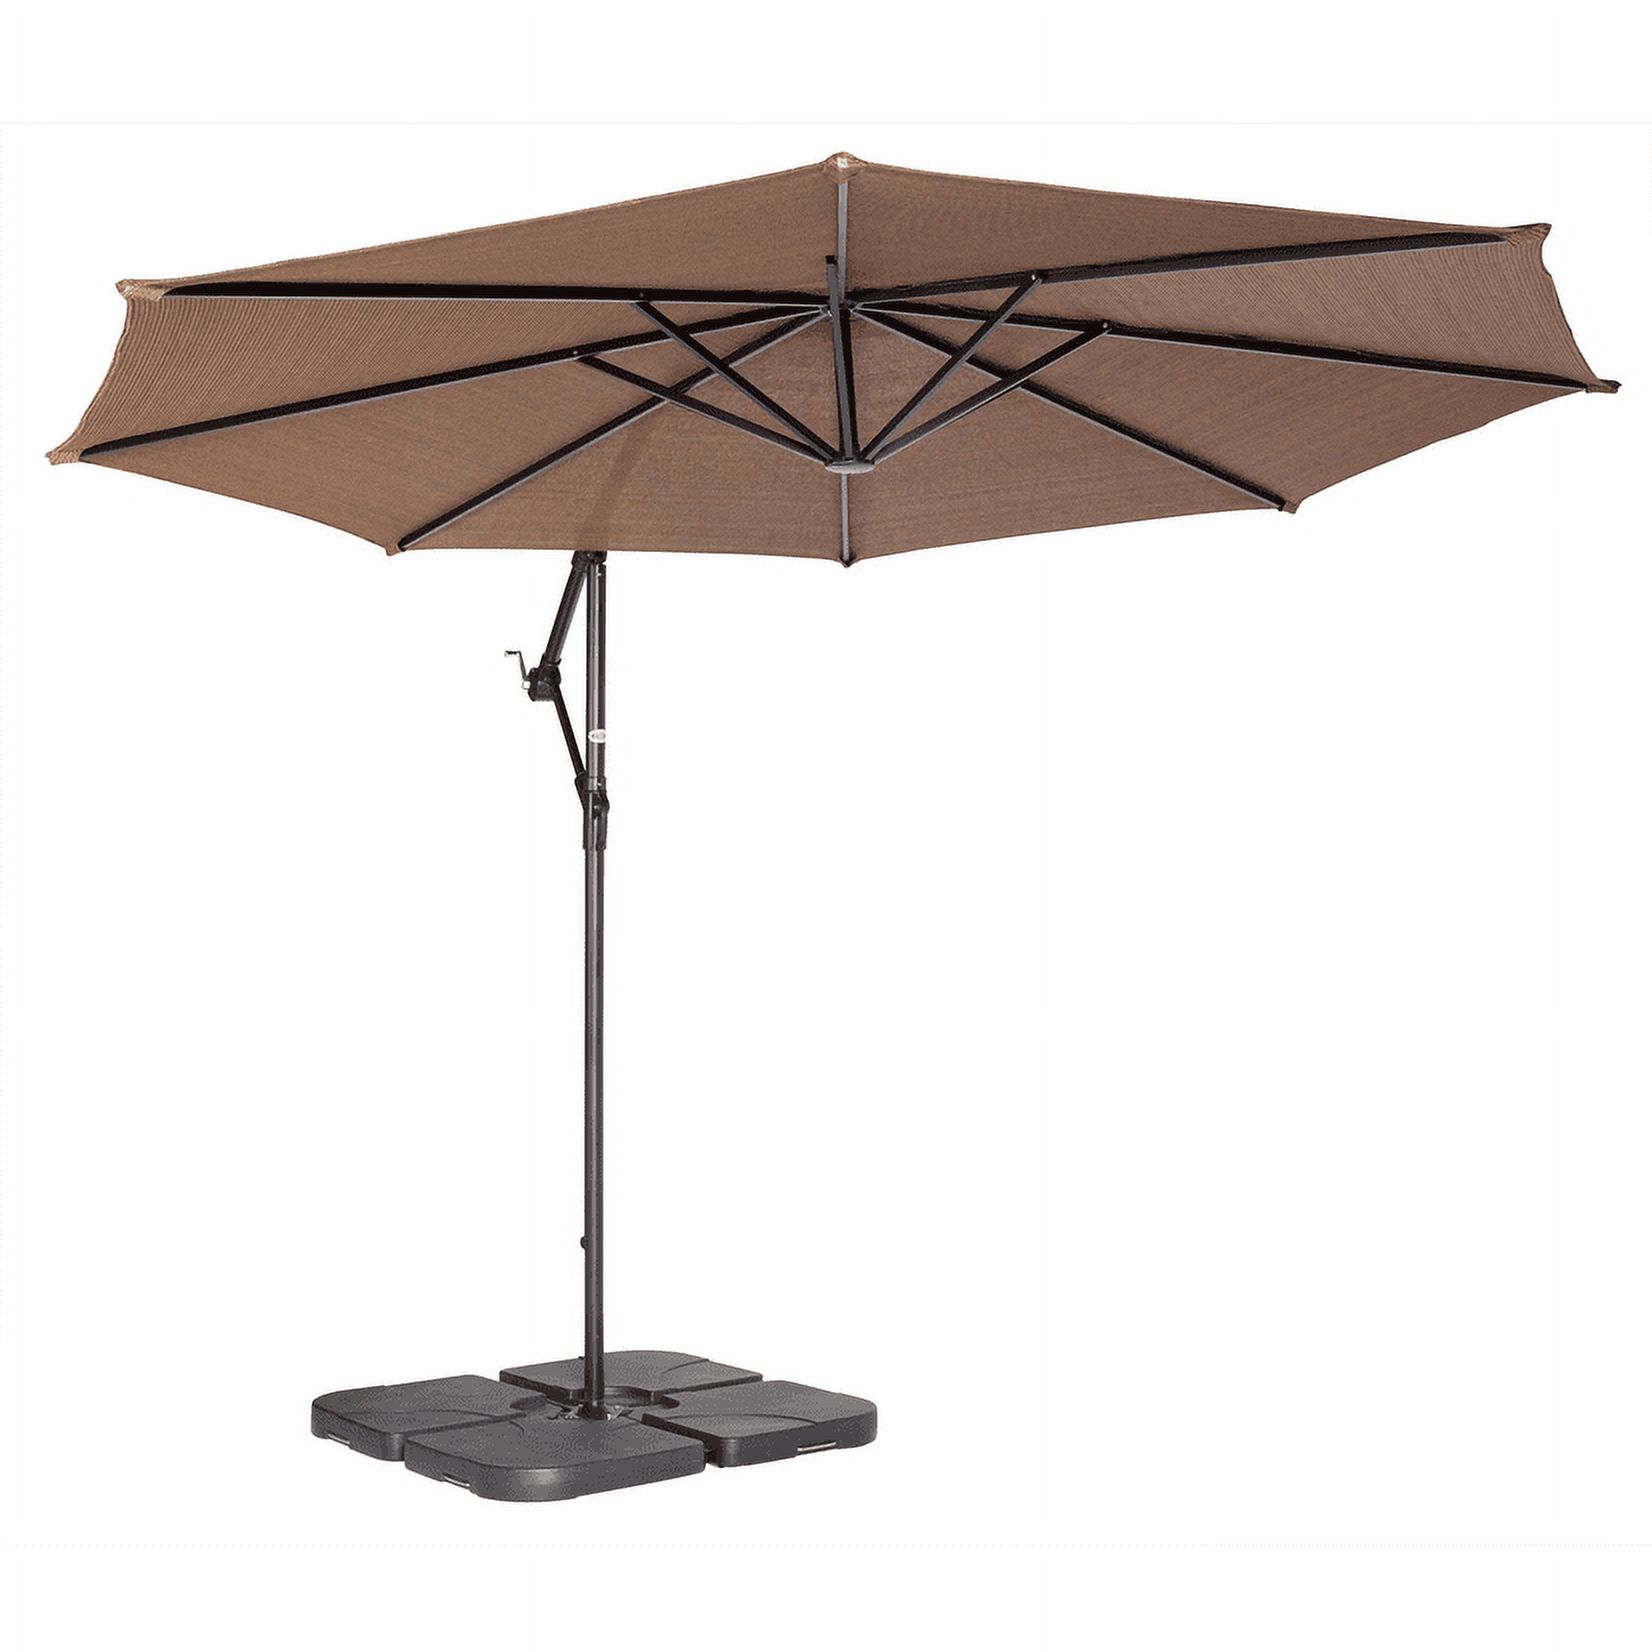 Coolaroo Round Cantilever Patio Umbrella, 90% UV, 10', Mocha - image 2 of 5